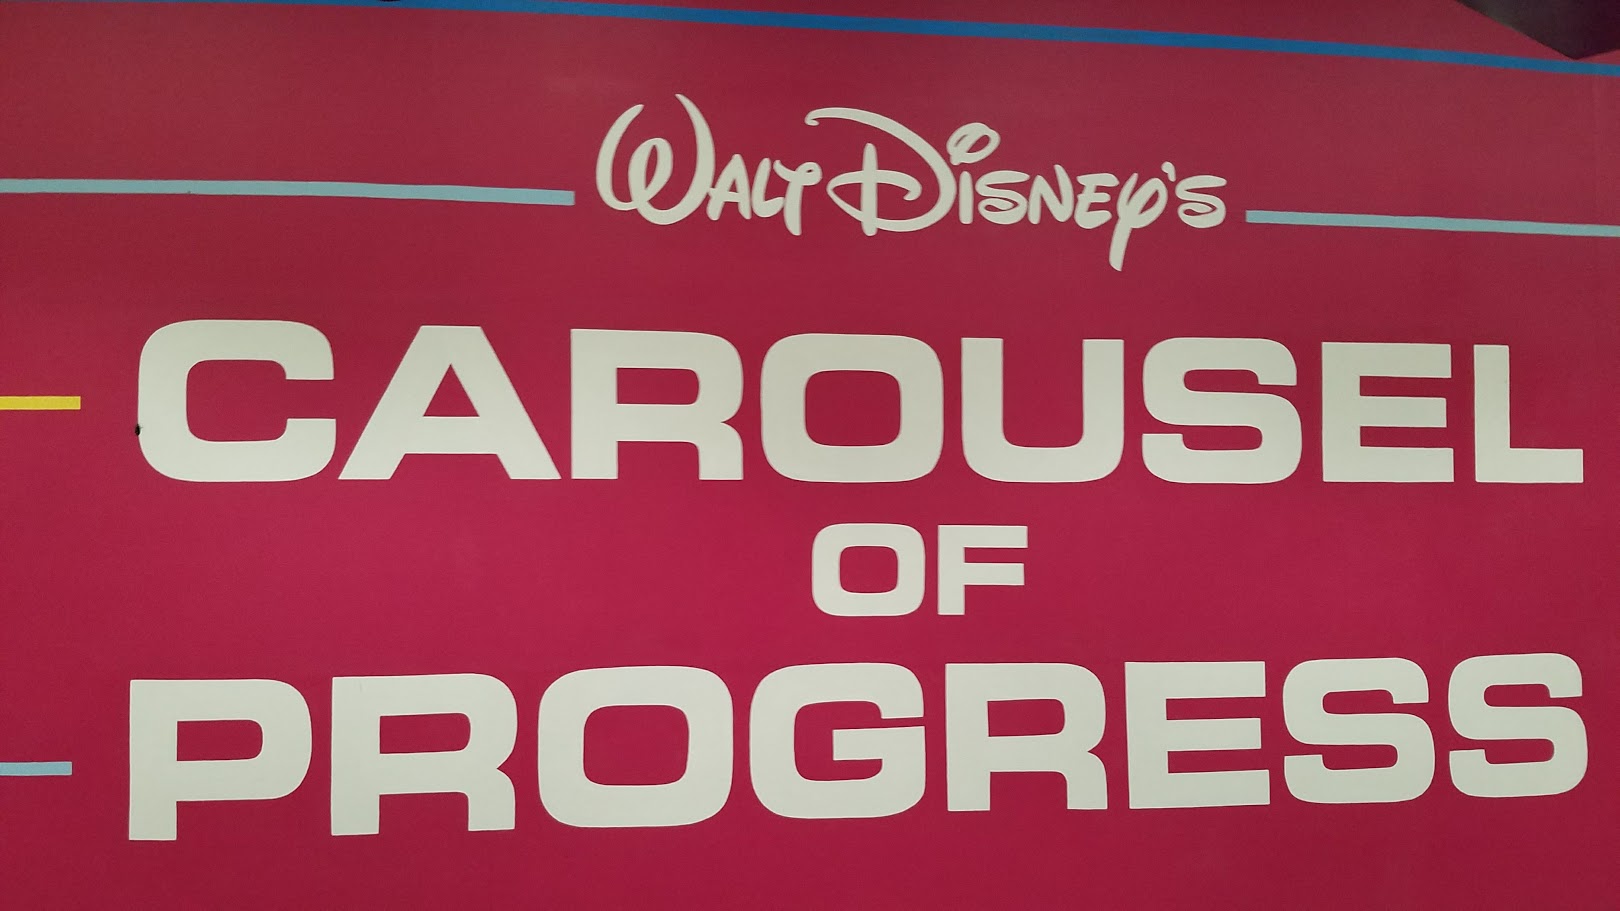 Walt Disney’s Carousel of Progress gets a new paint job